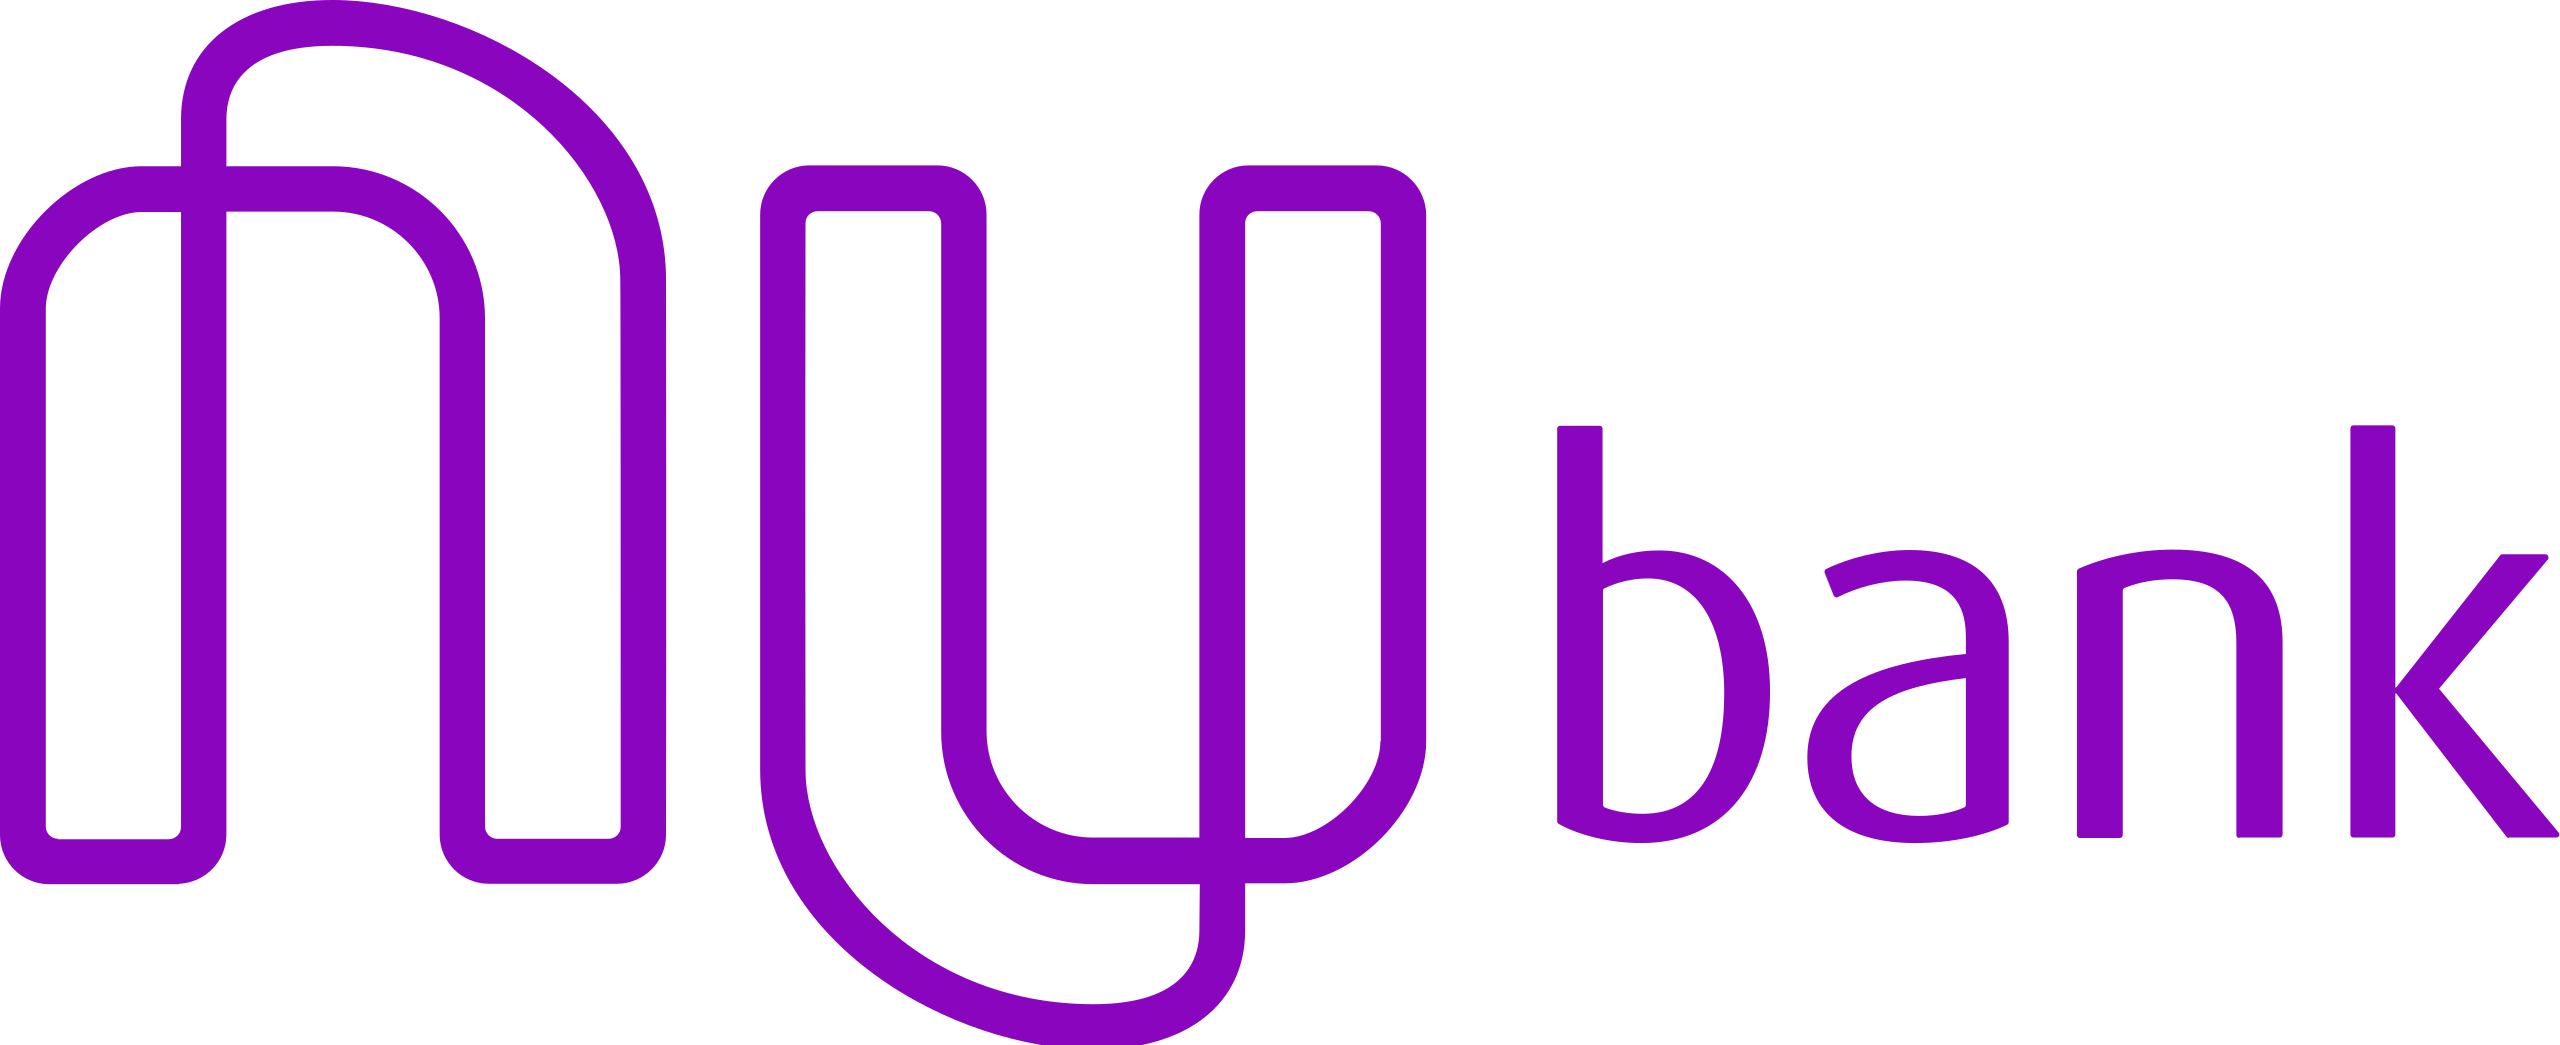 Nubank_logo.svg